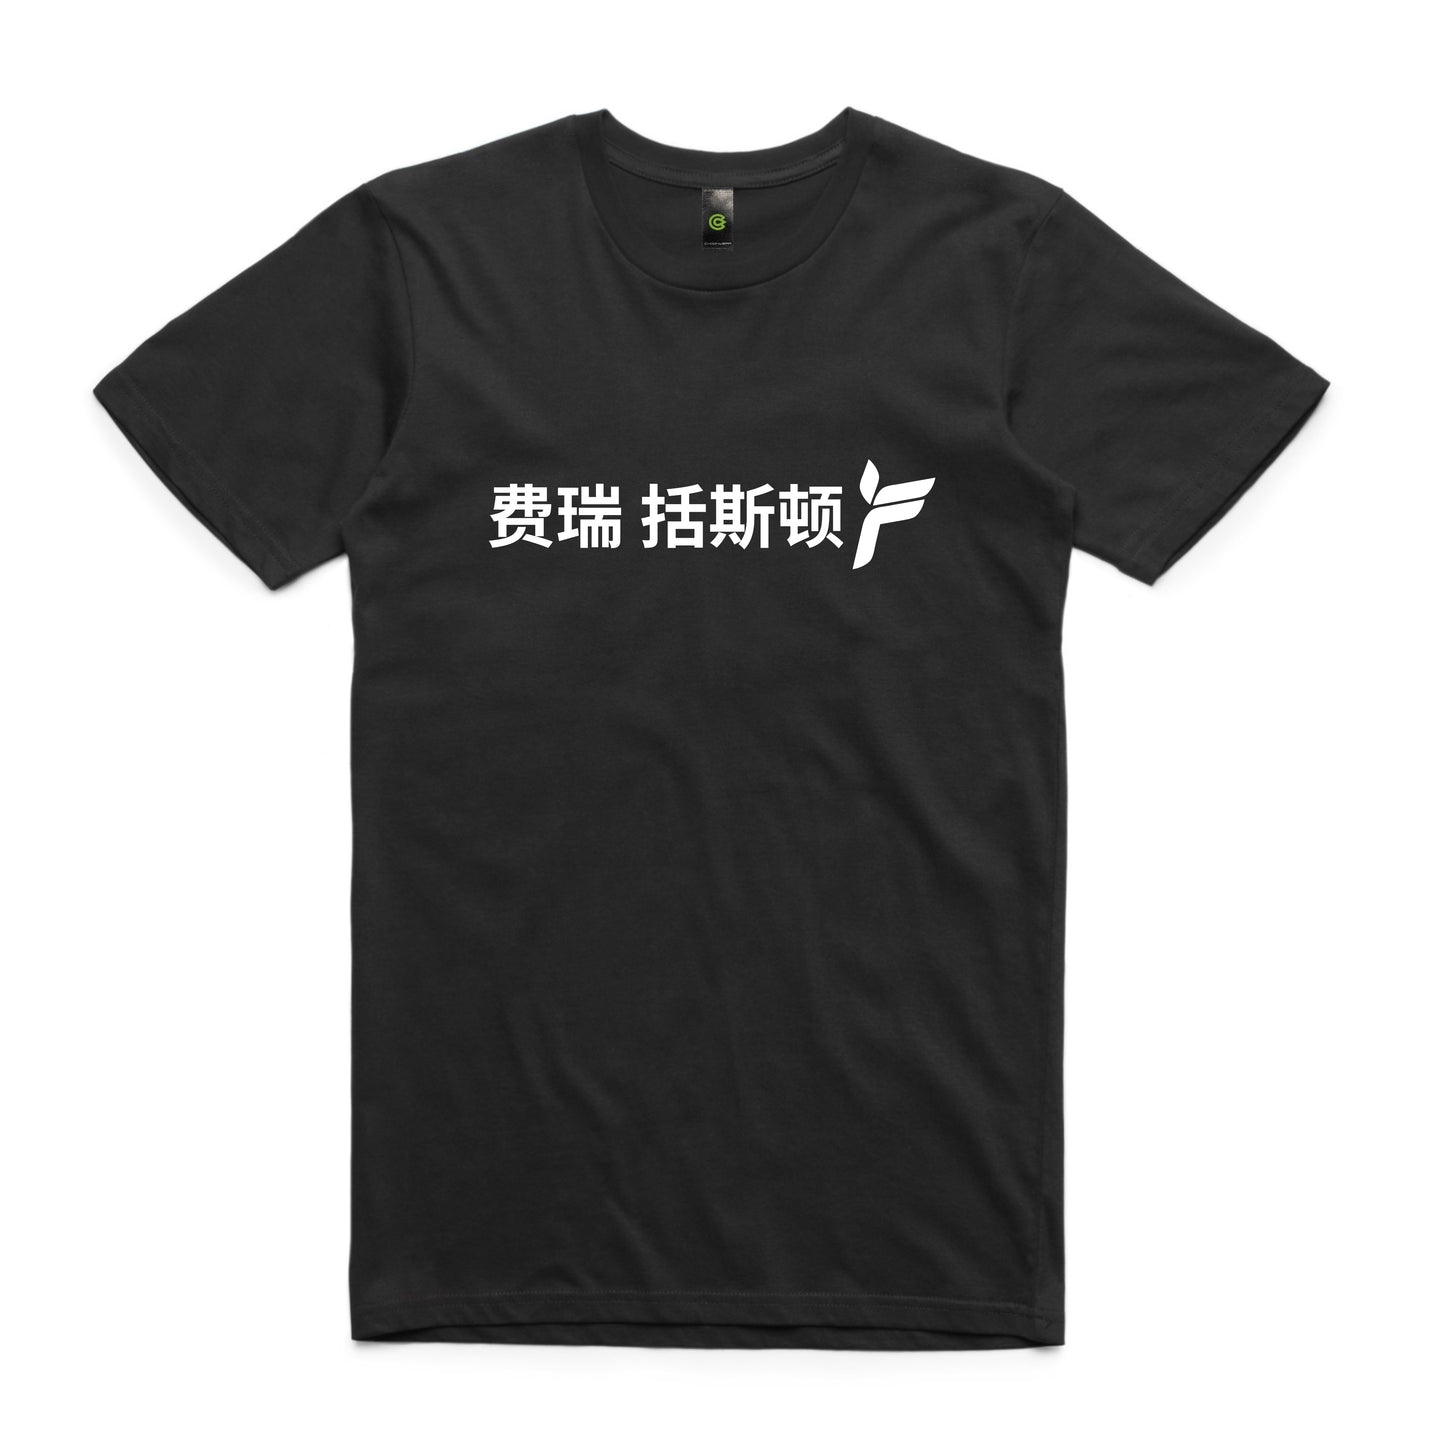 Ferry Corsten - Chinese logo tee